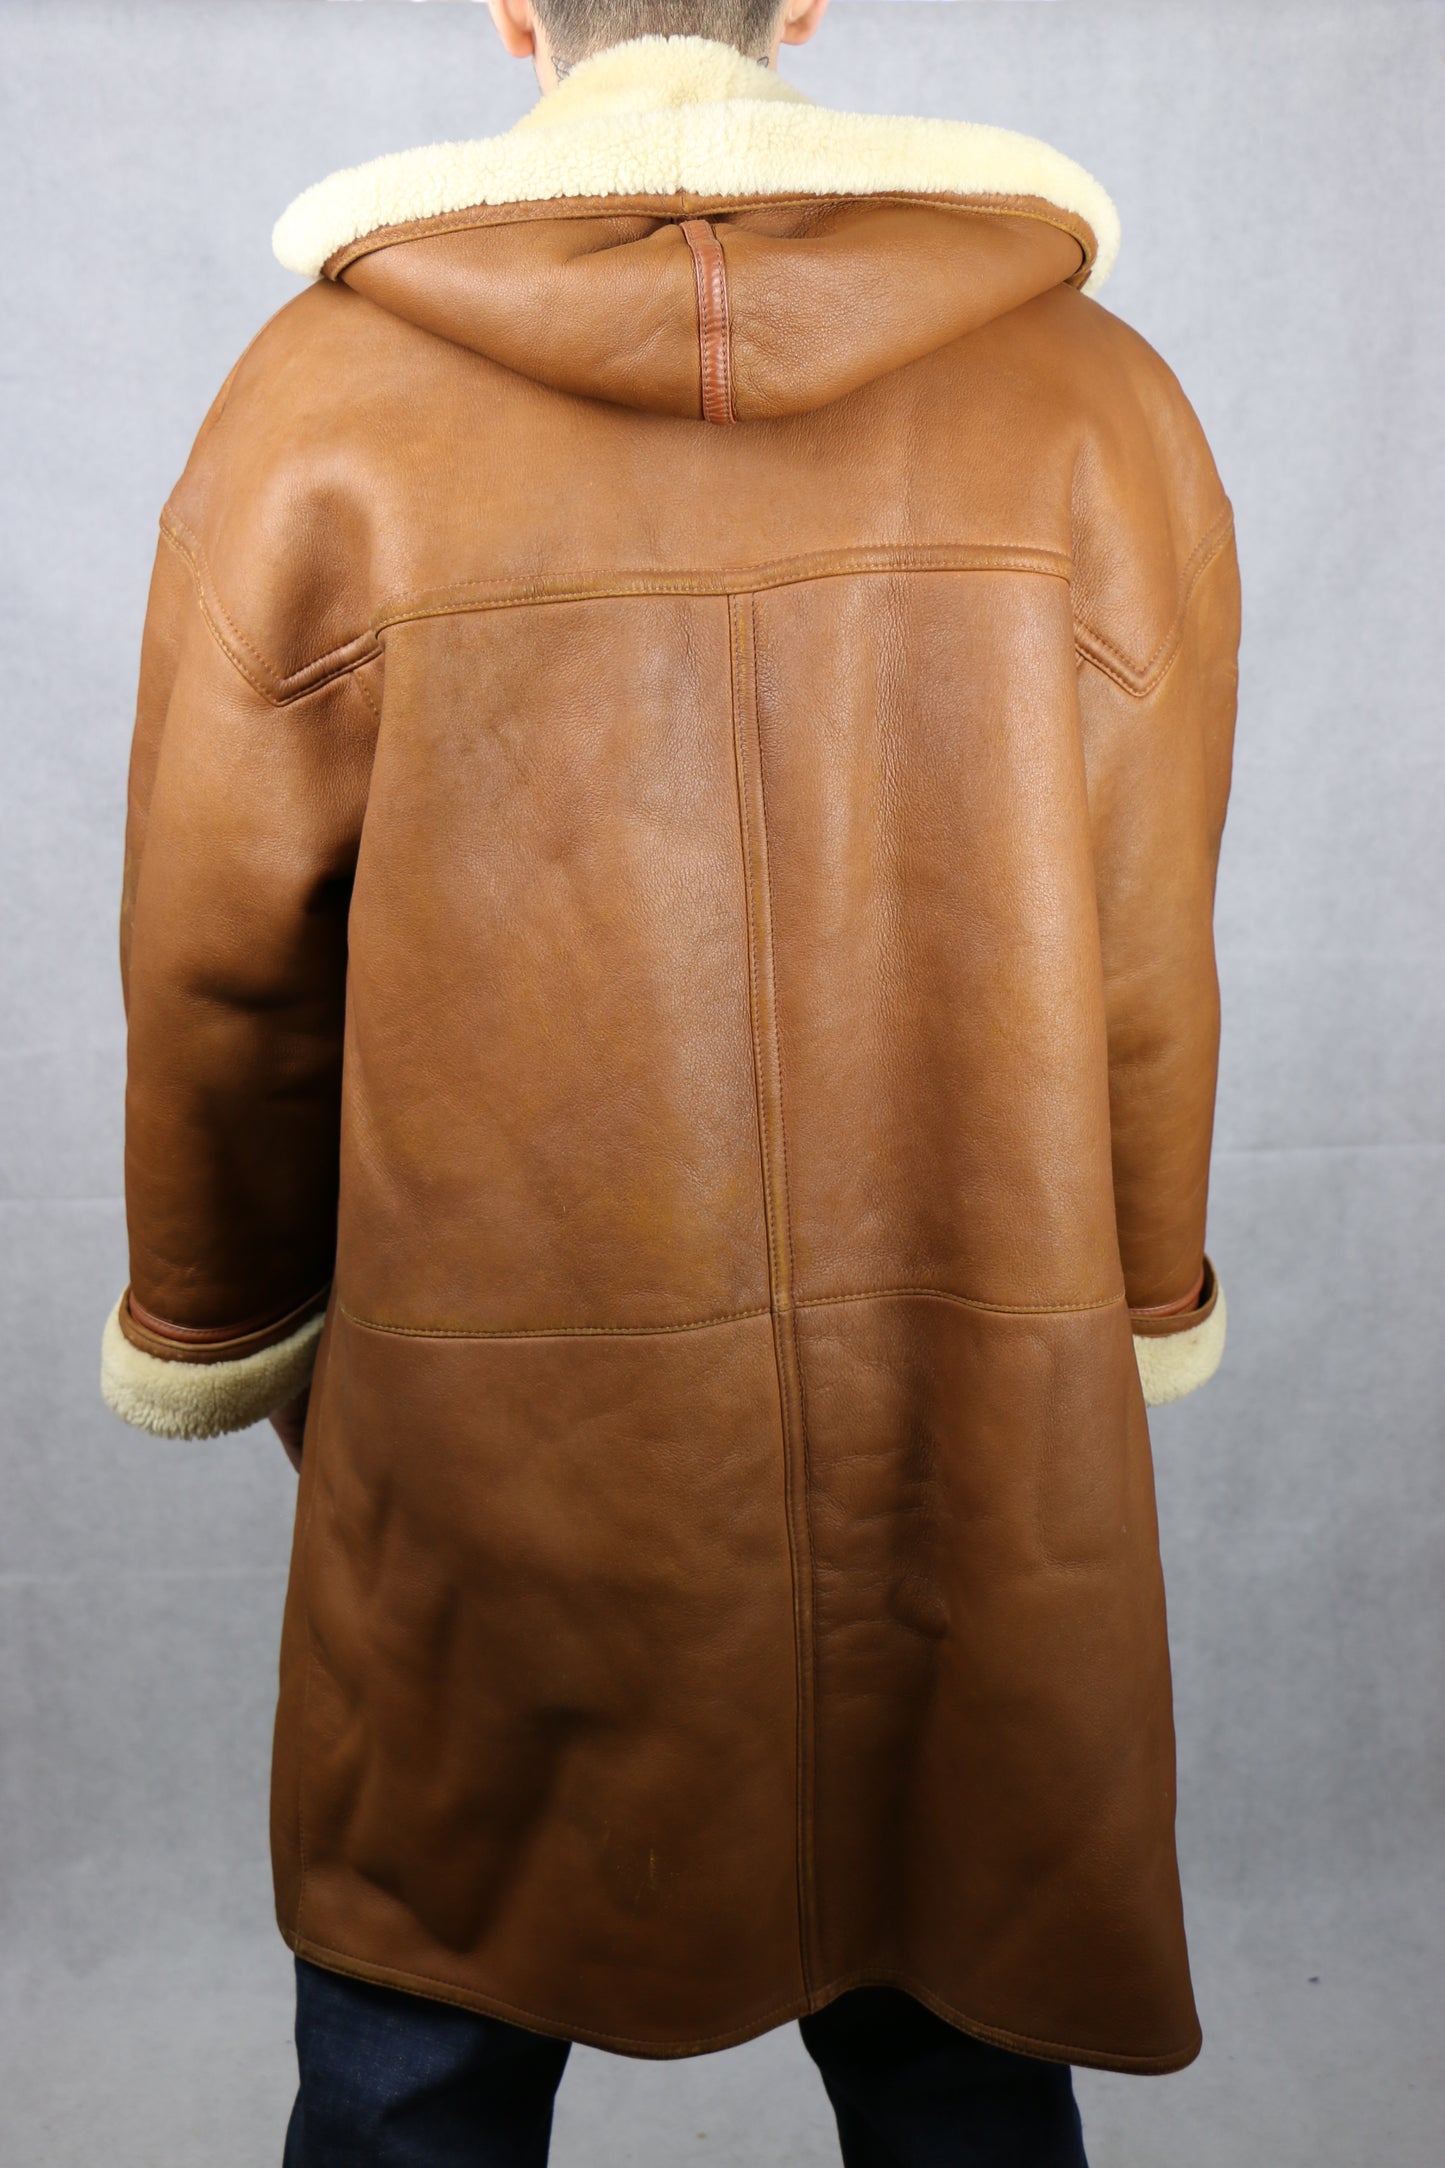 Max Mara Shearling Coat - vintage clothing clochard92.com